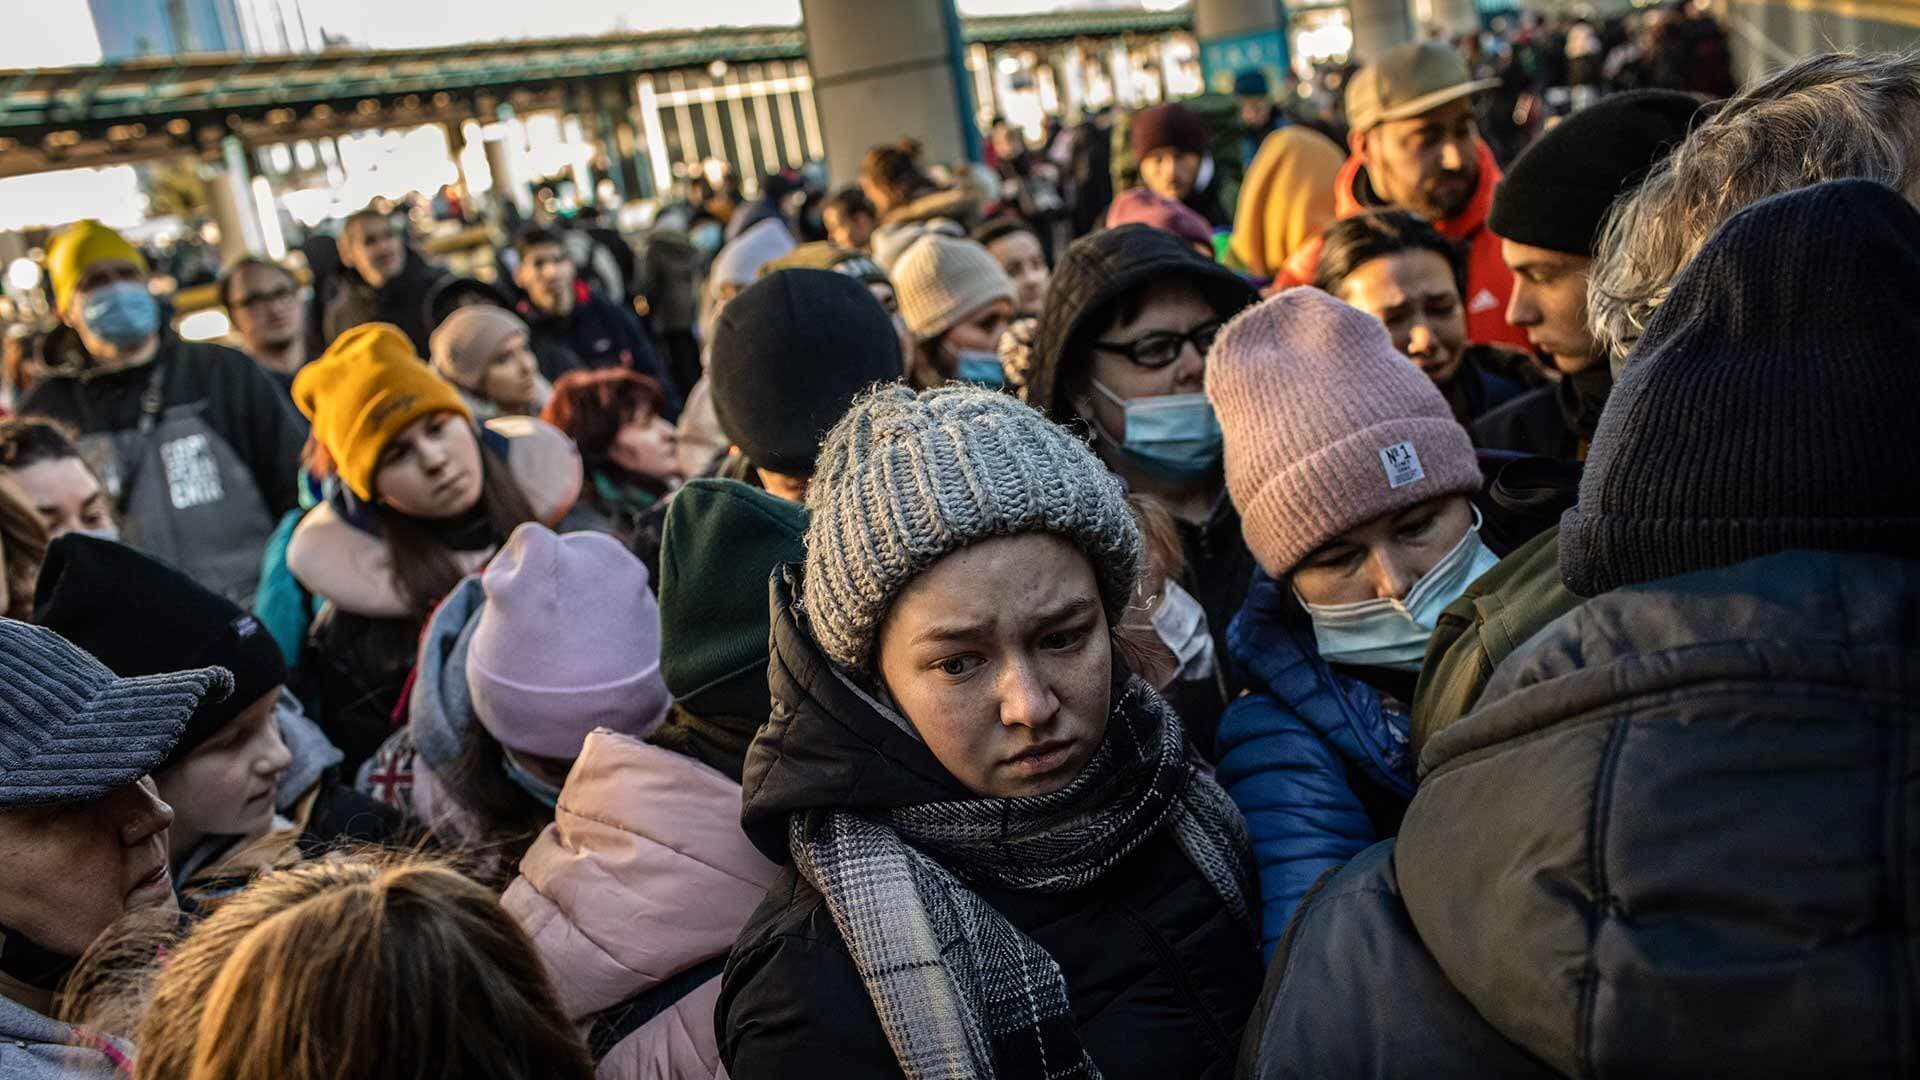 Displaced Ukrainians board a train at Kyiv central train station